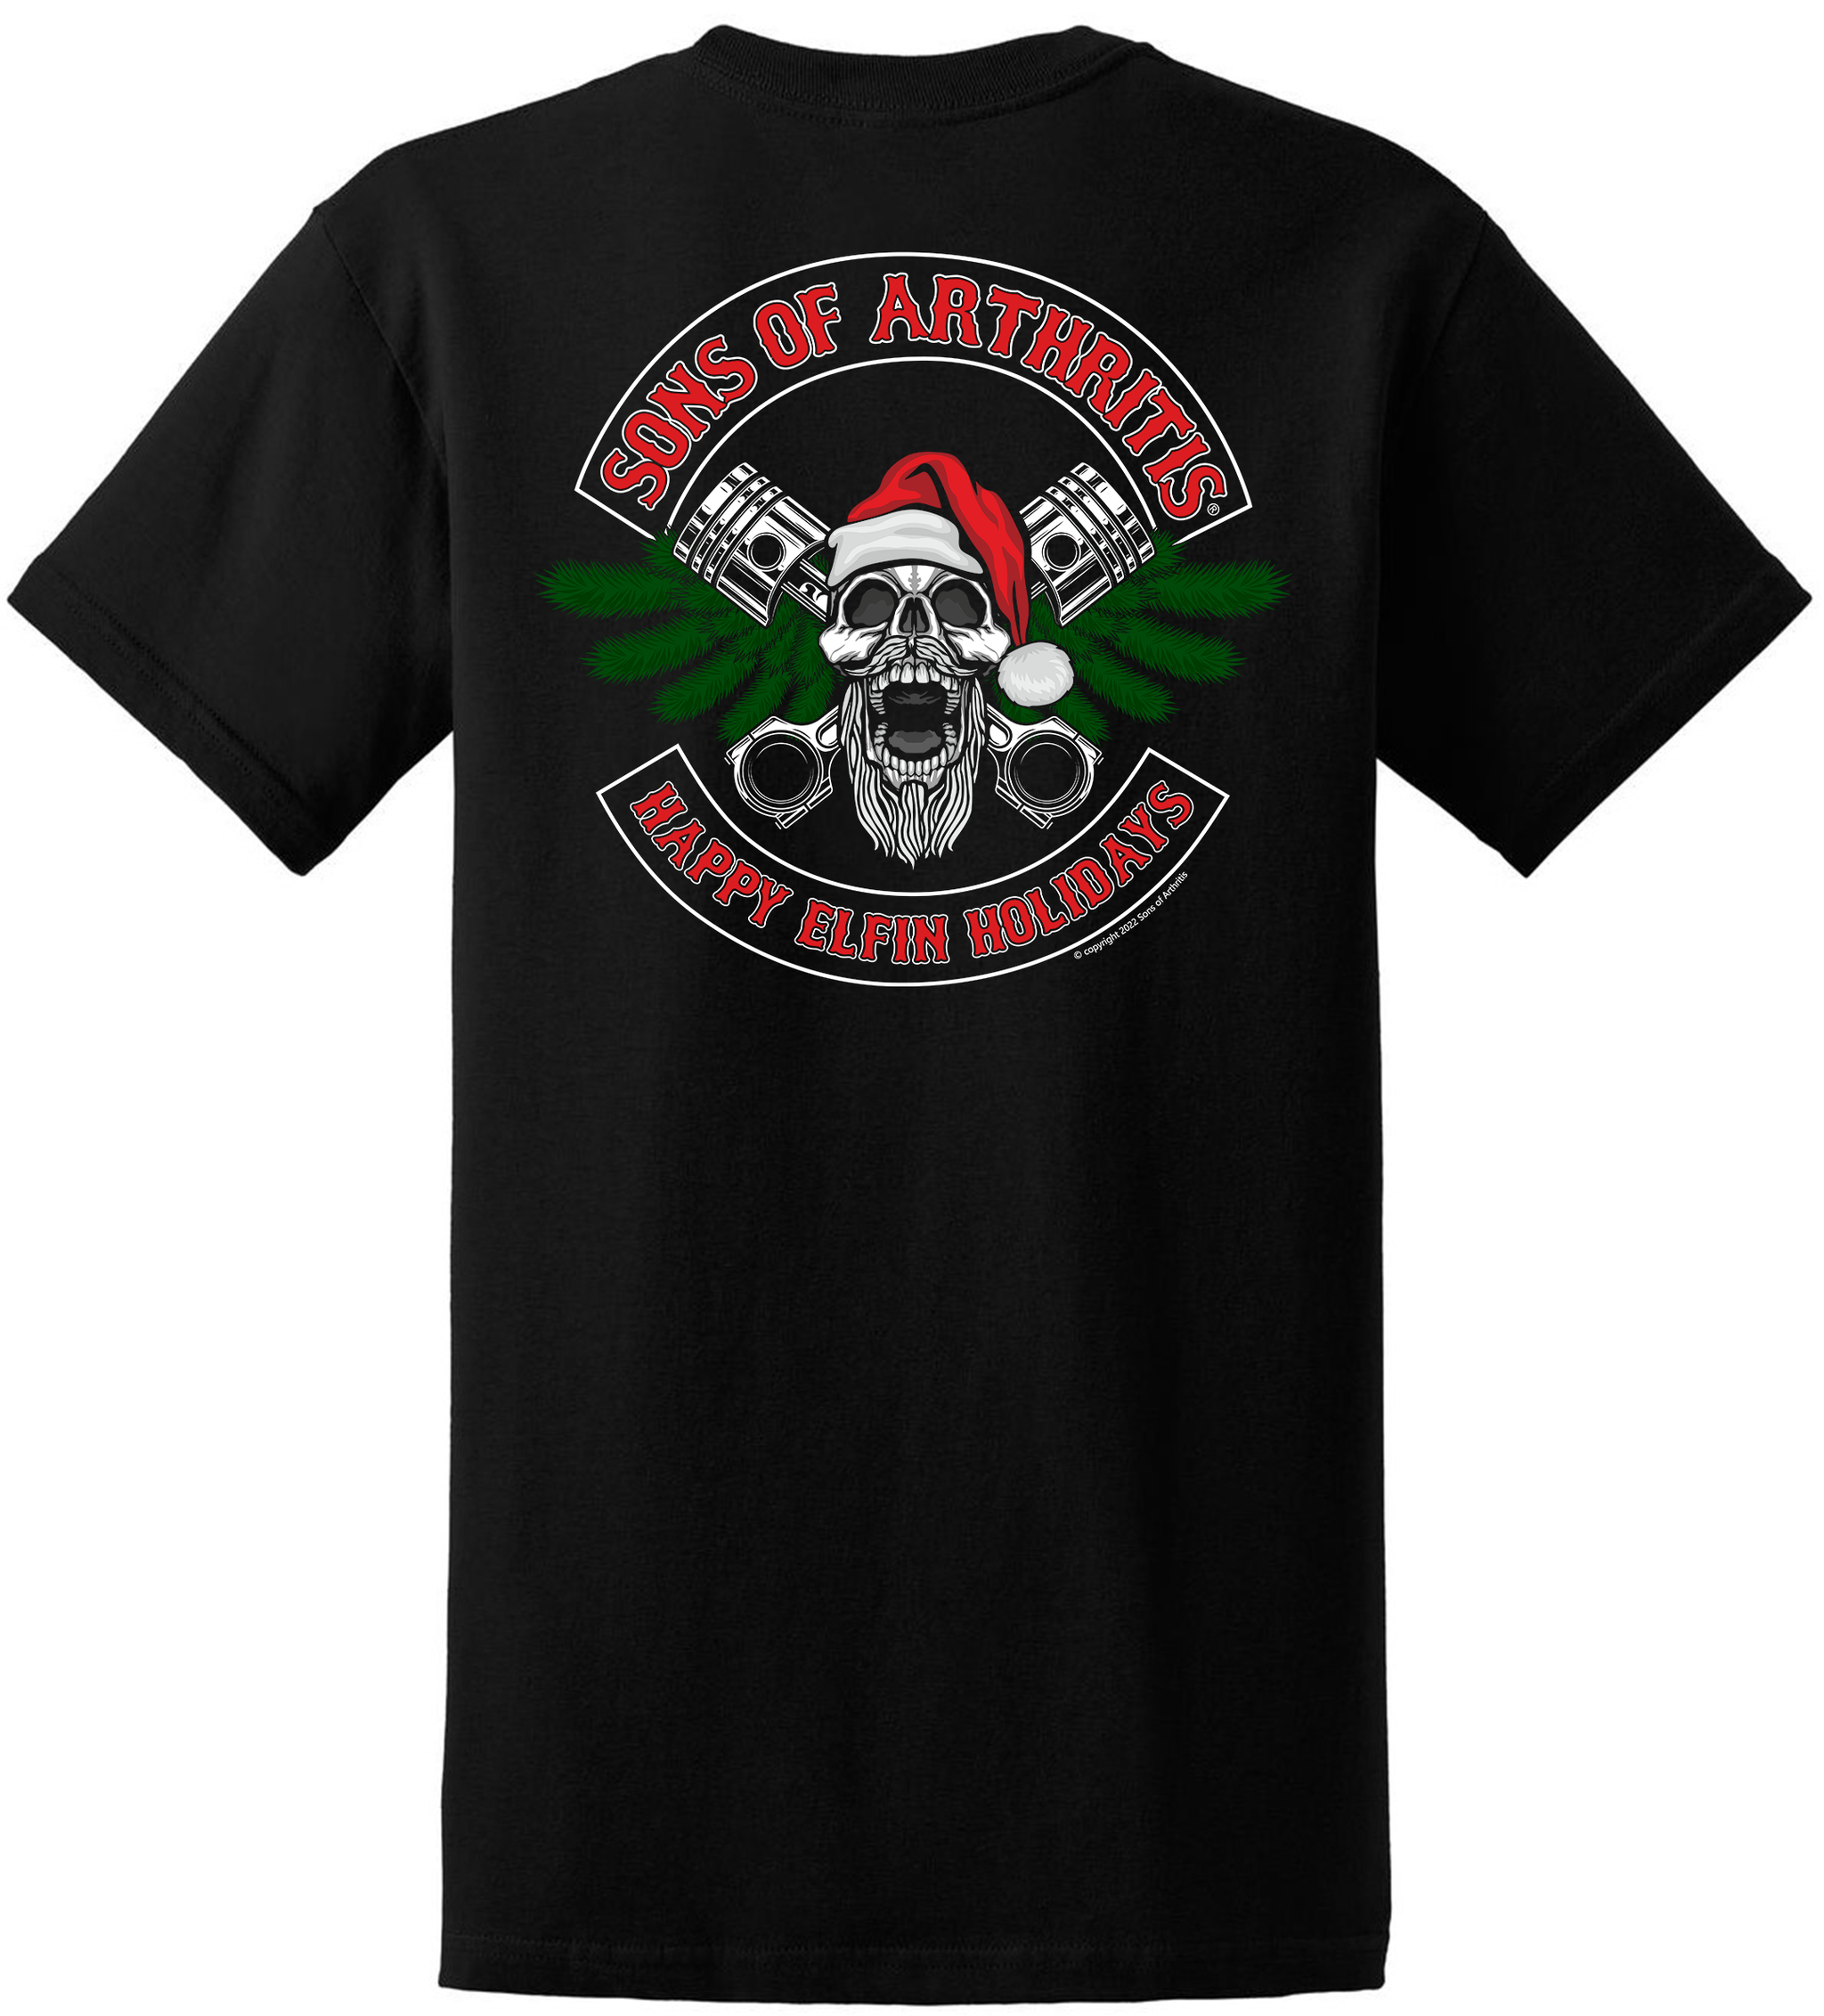 Happy Elfin Holidays - Black T-Shirt - Sons of Arthritis